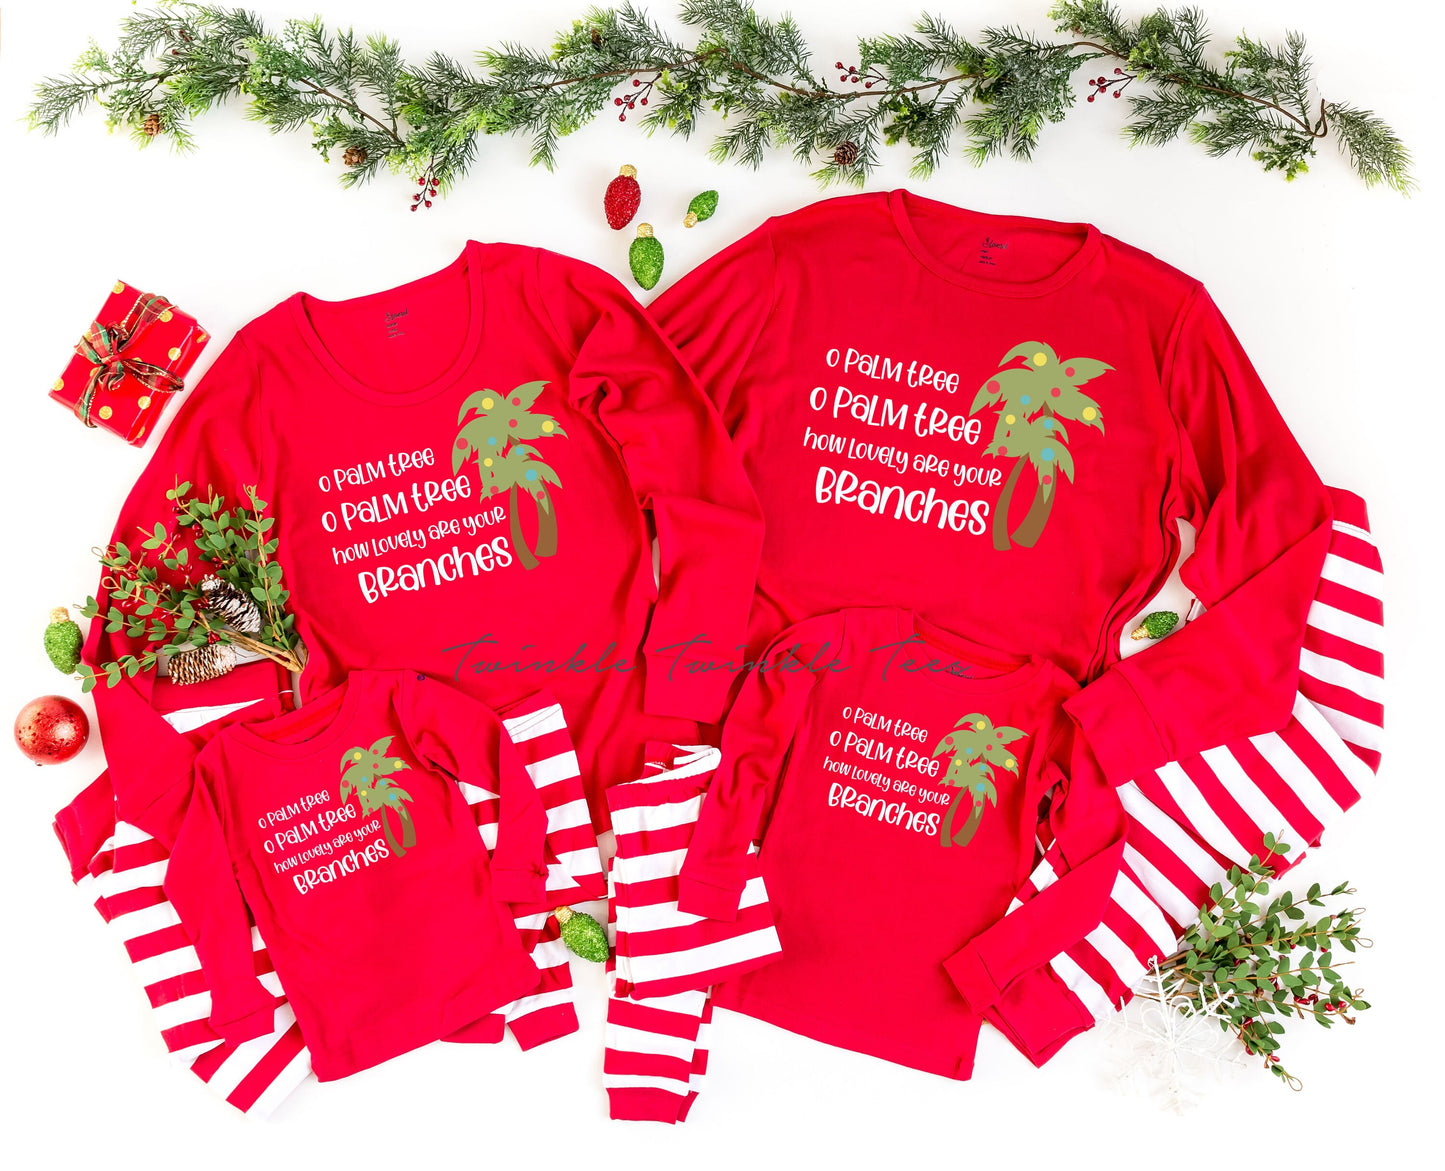 O Palm Tree How Lovely Are Your Branches Red Top Striped Christmas Pajamas - beach christmas - nautical christmas - coastal christmas